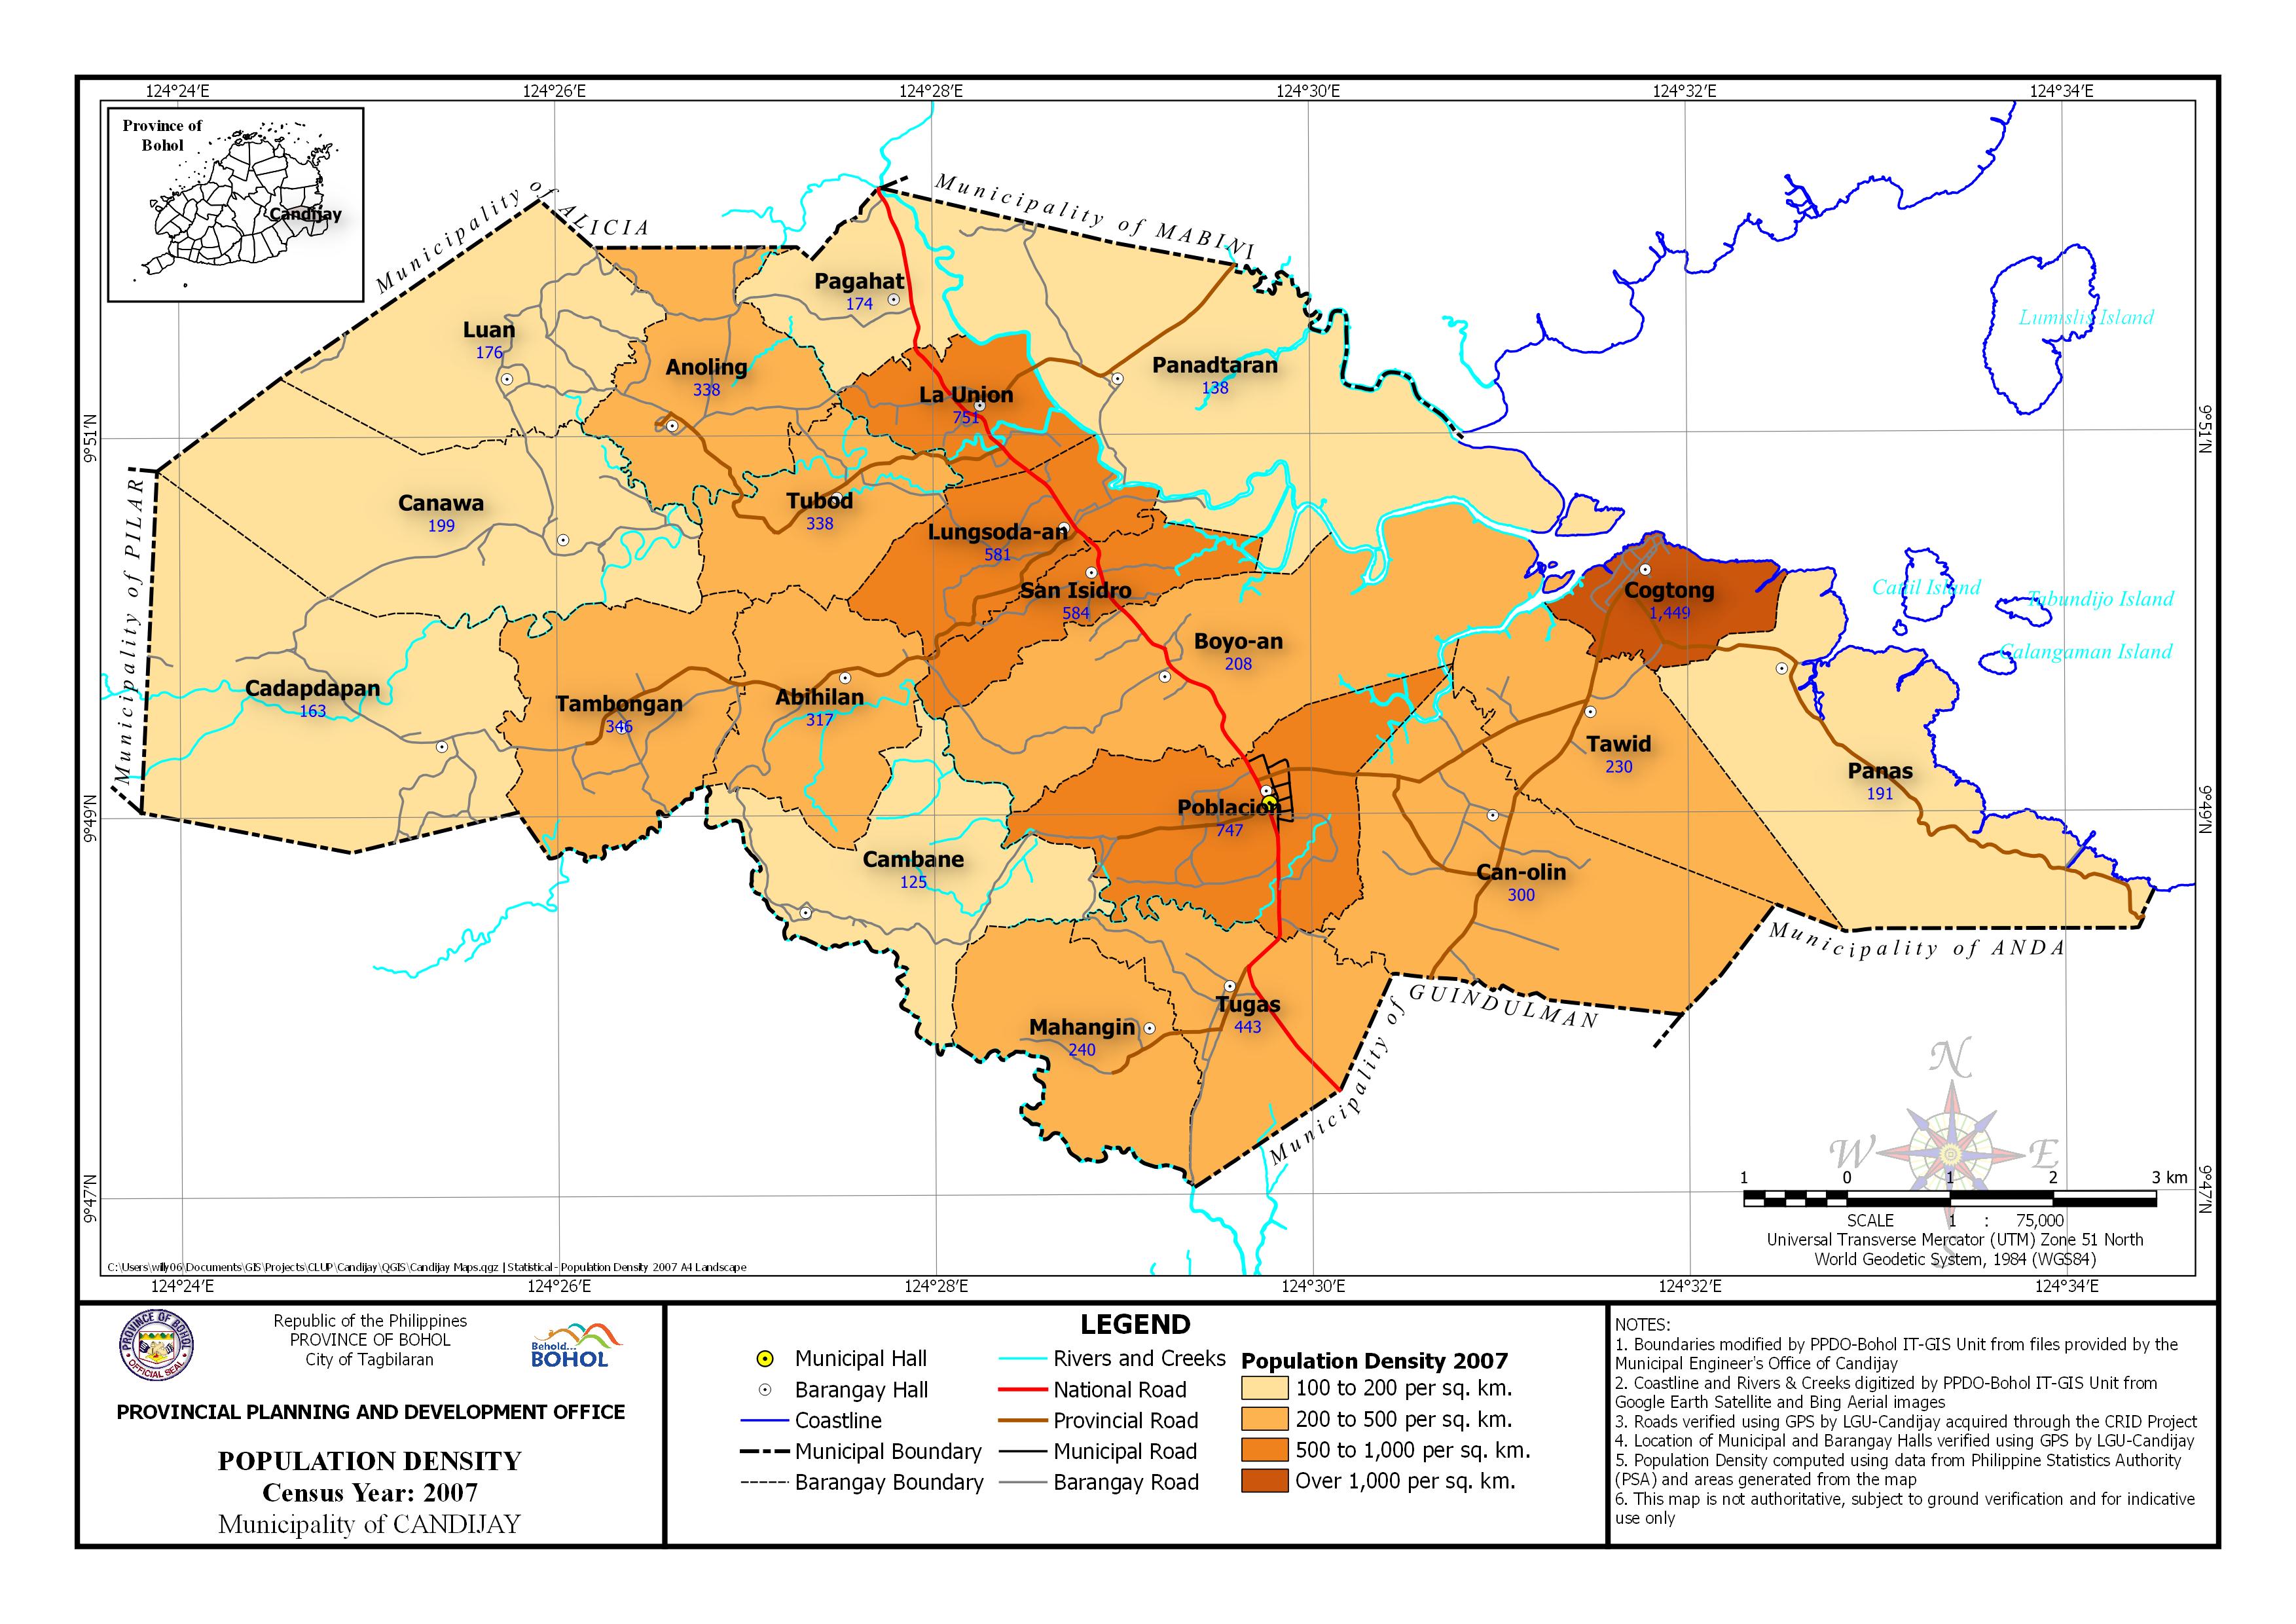 Population Density Census Year: 2007